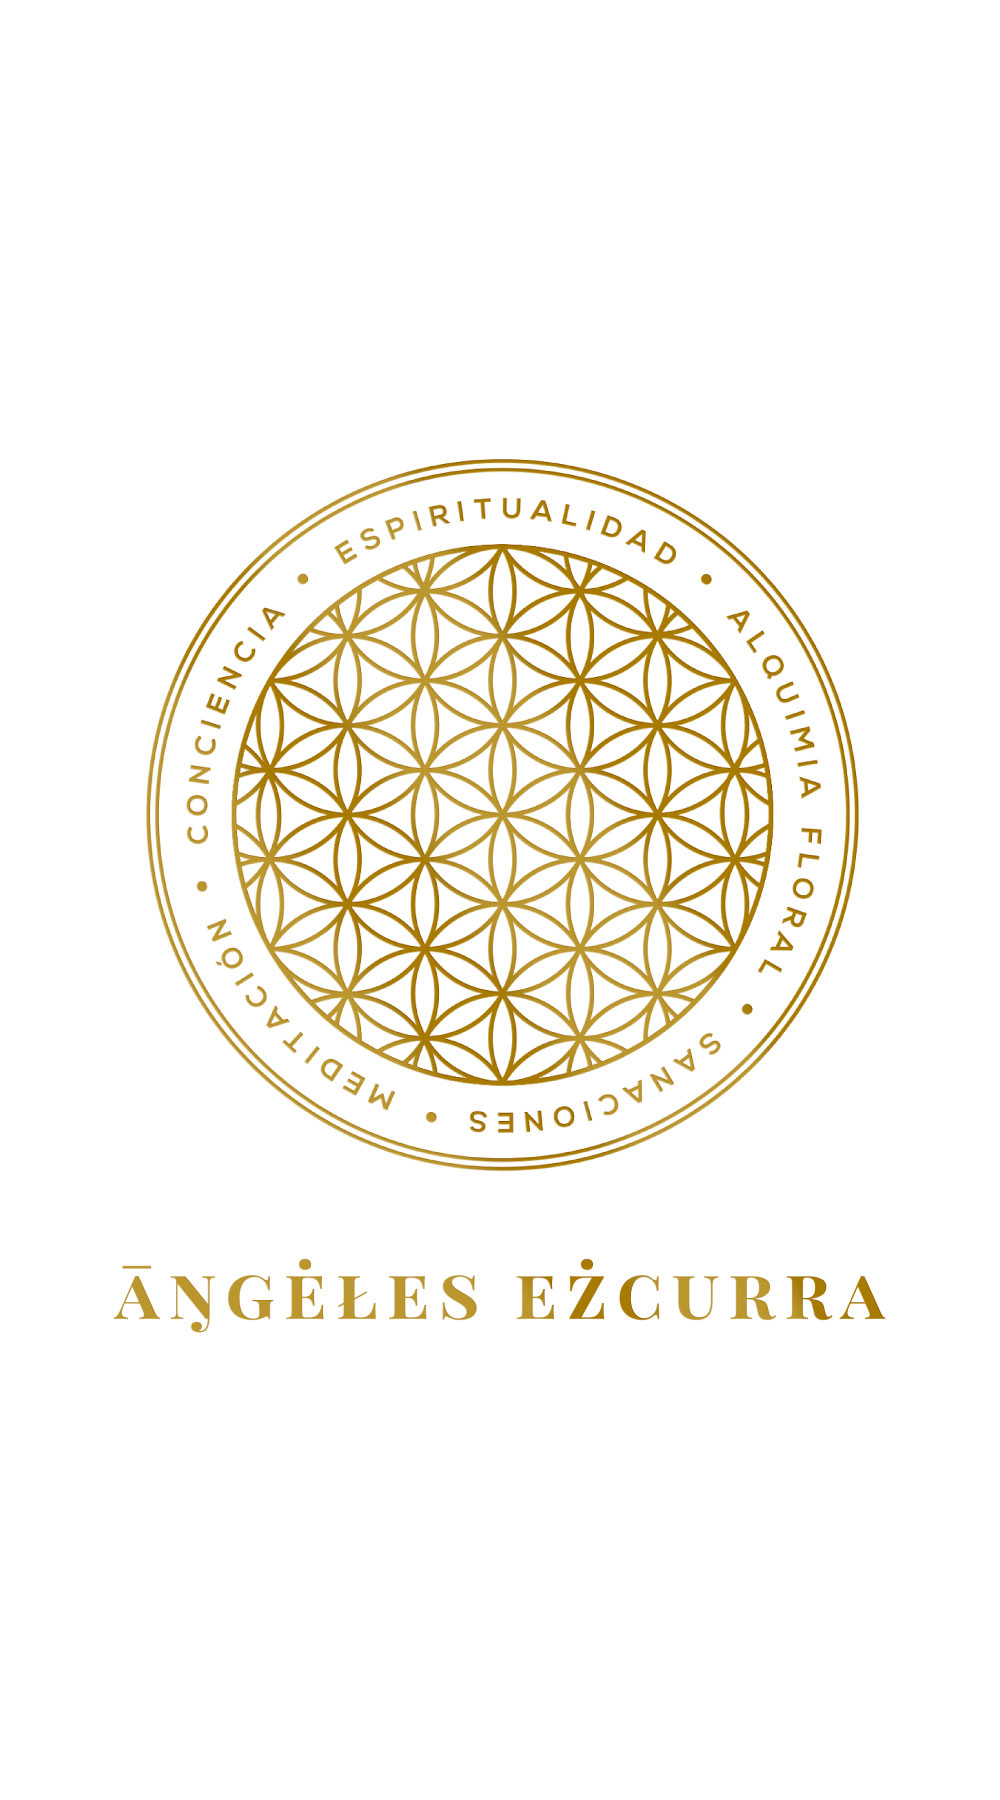 Angeles Ezcurra